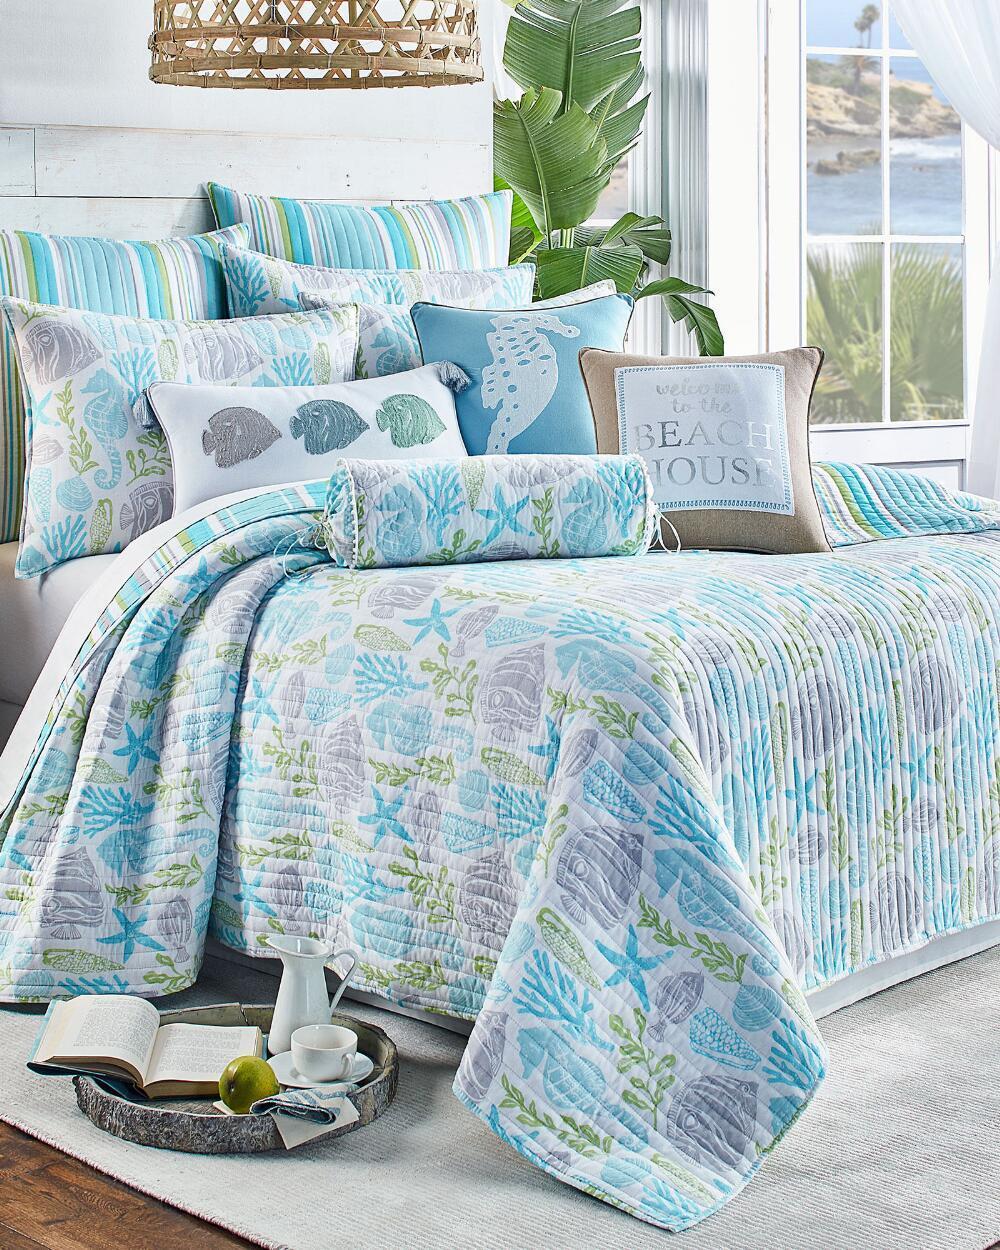 Luxury Bedding Soft Cozy Blue Green Coastal Under the Sea ...